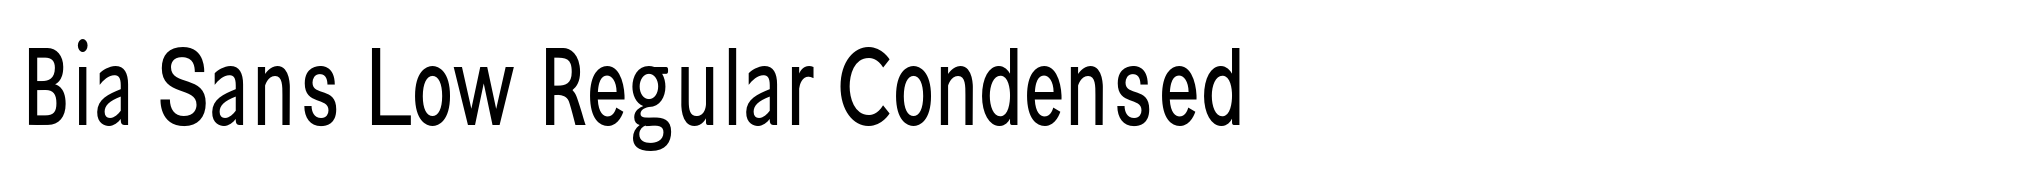 Bia Sans Low Regular Condensed image